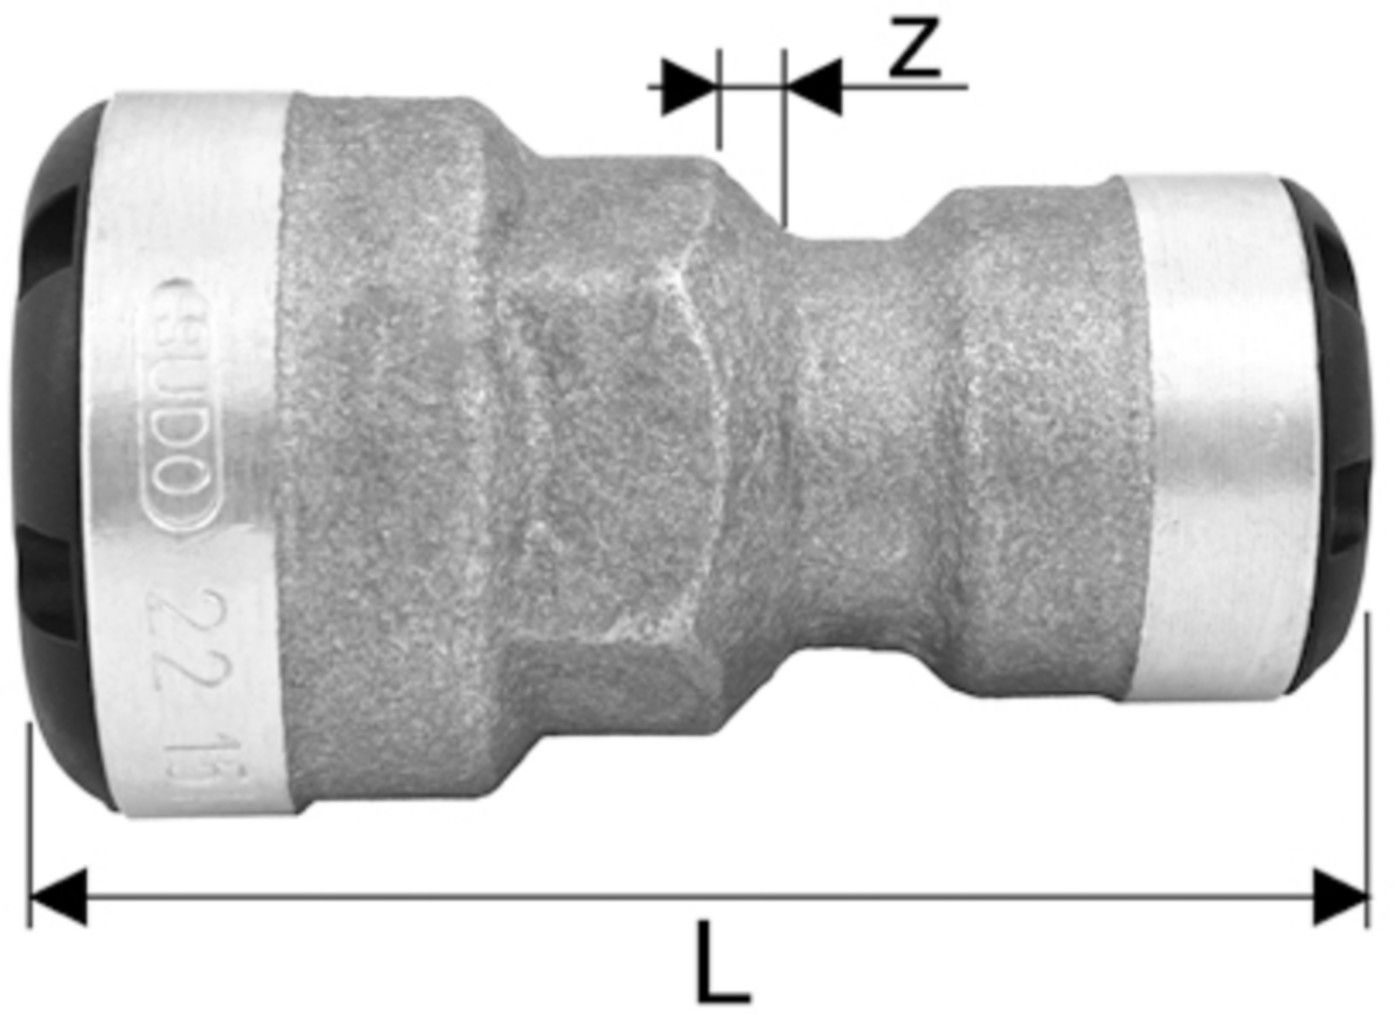 Muffe reduziert mit Stützhülse d 16-14 mm 9826.1614 - SudoFIT-Formstücke